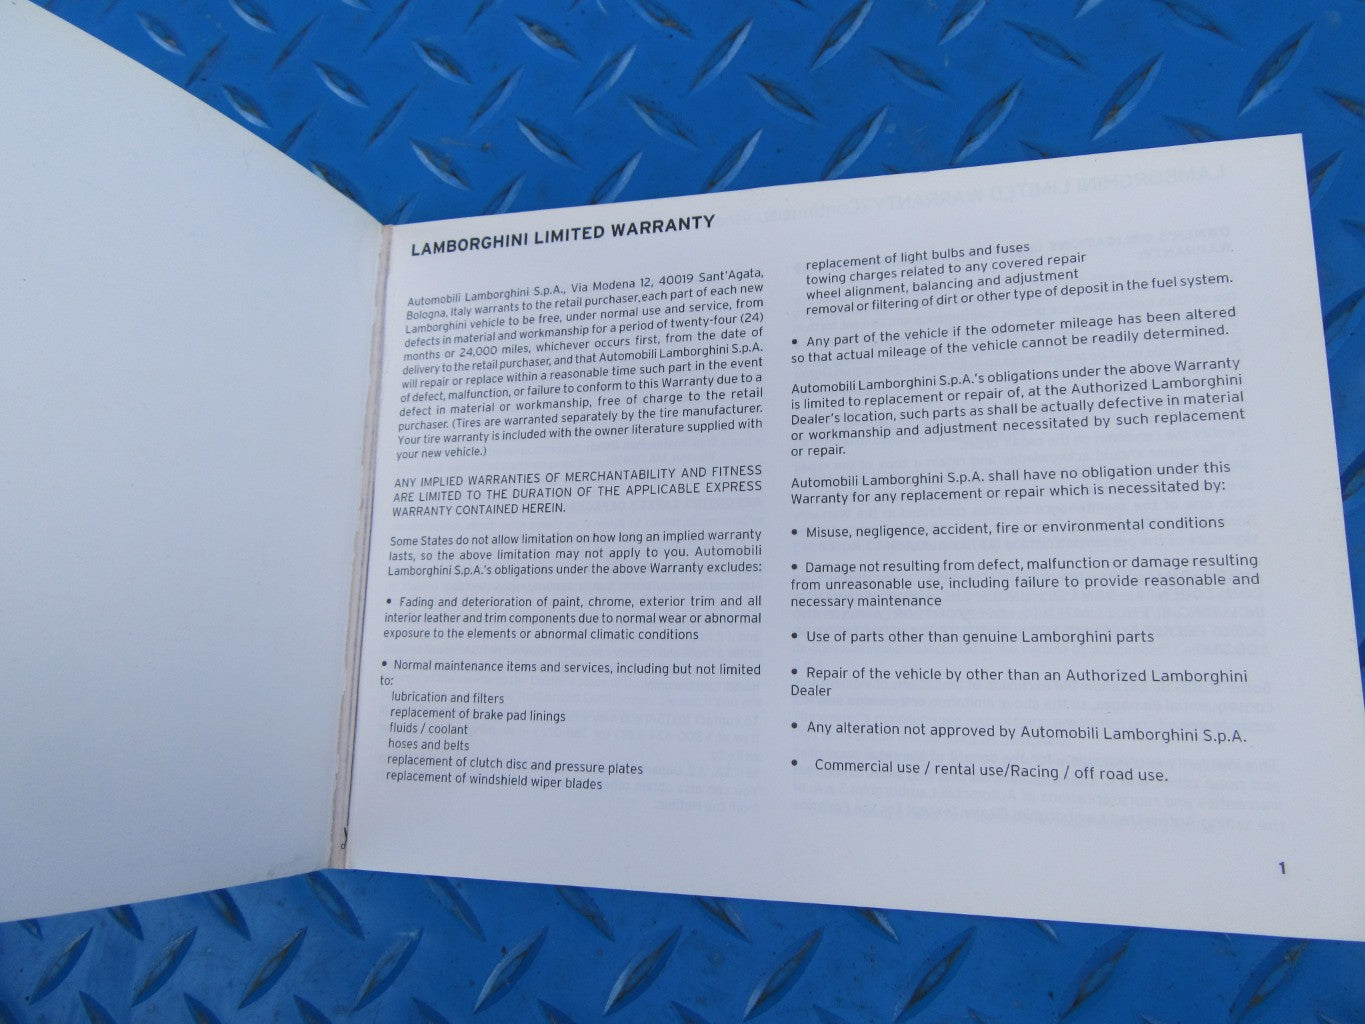 Lamborghini Gallardo warranty and scheduled maintenance plan booklet #2988